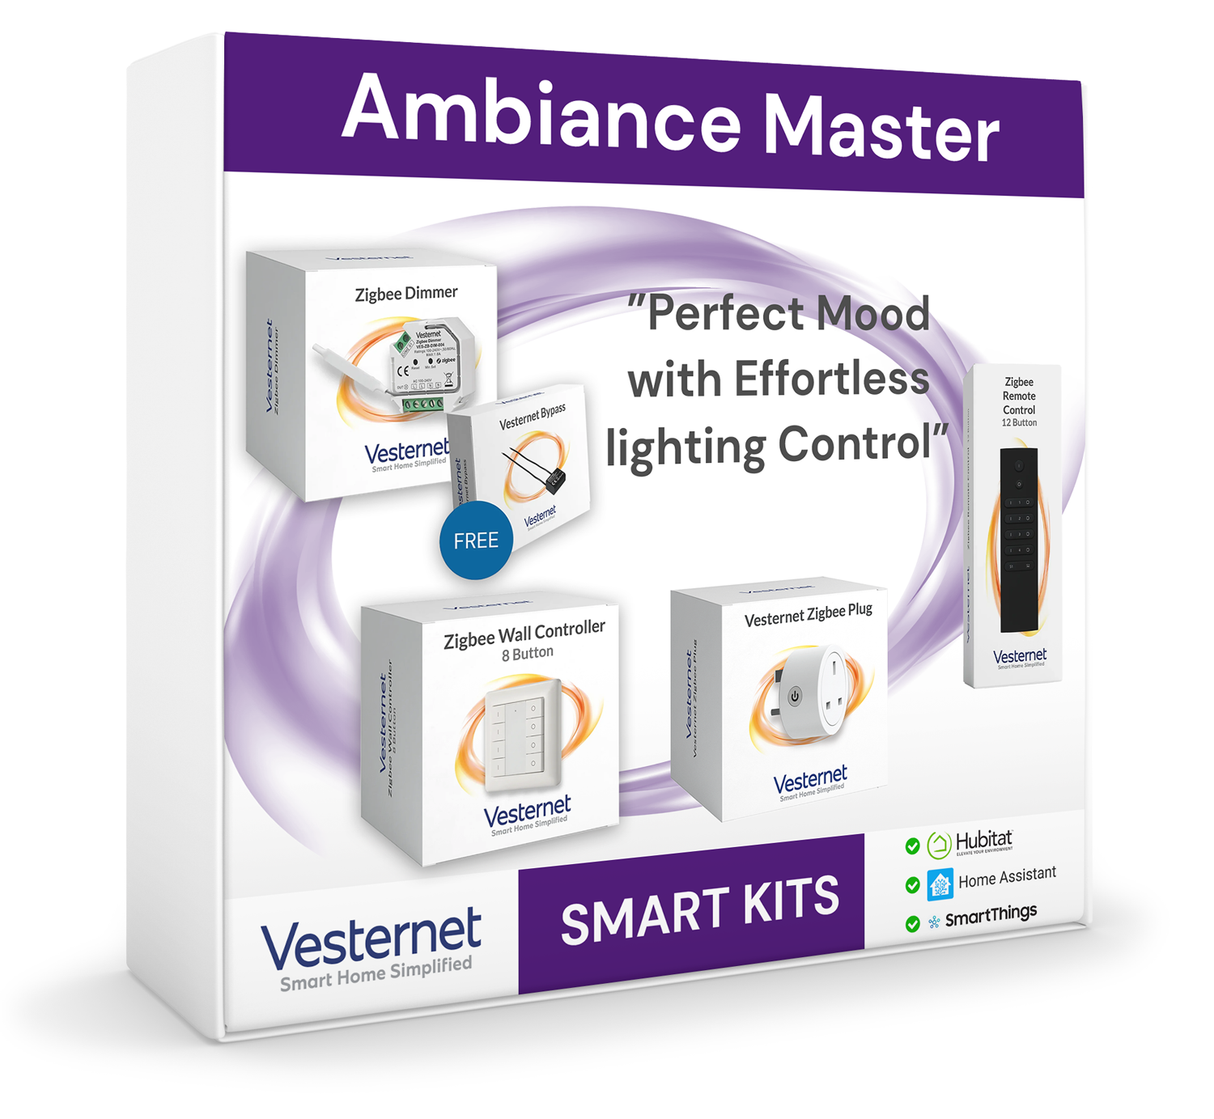 Ambiance Master: Slimme verlichtingsset voor perfecte stemmingsregeling